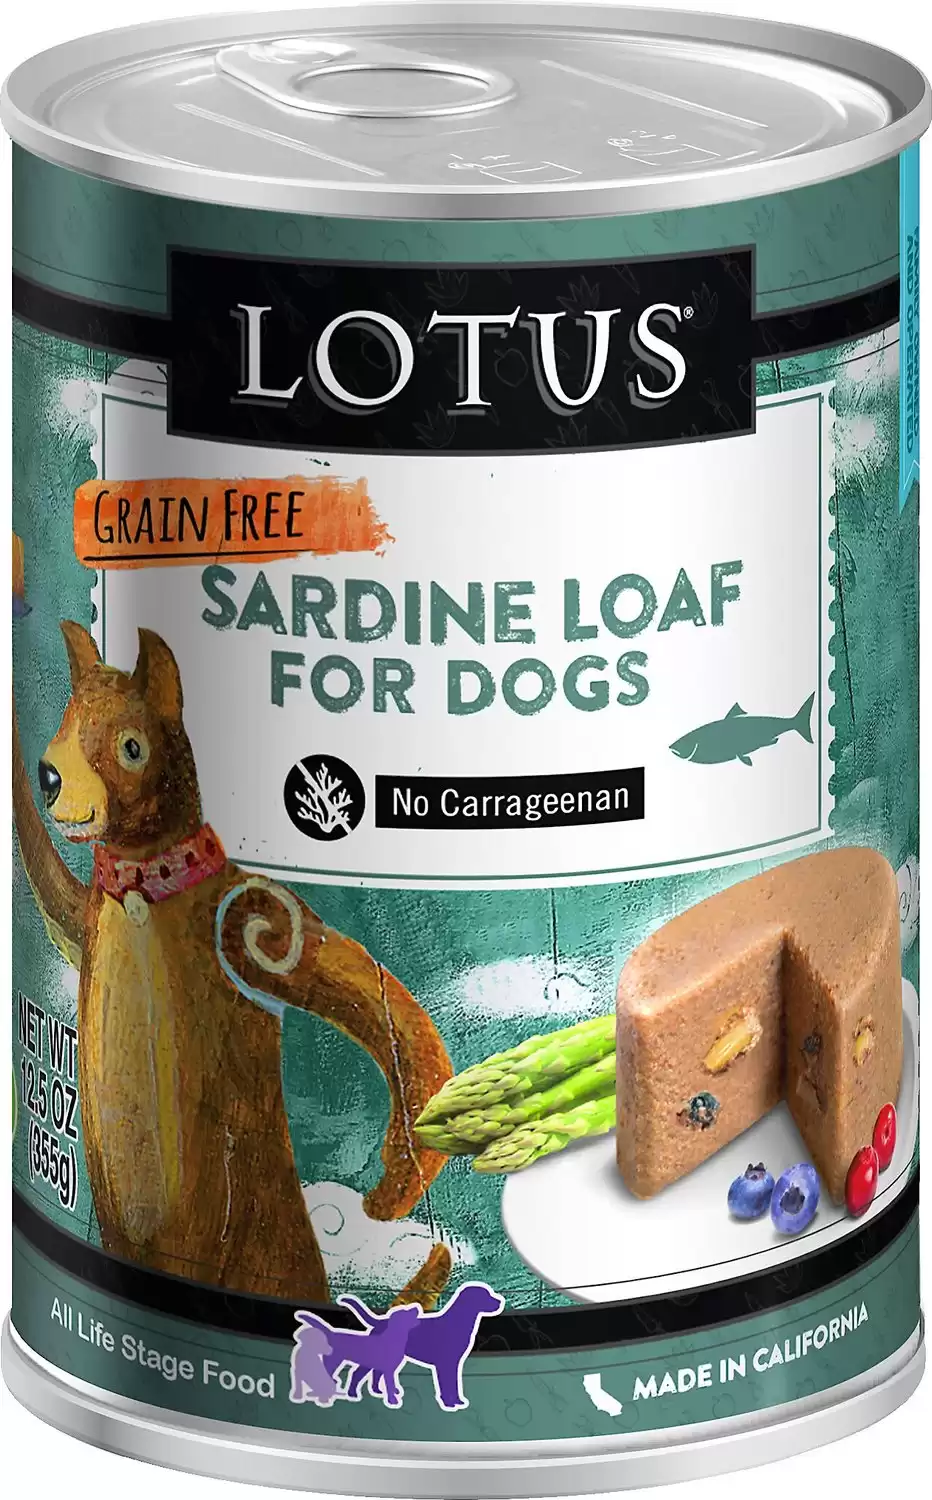 Lotus Sardine Loaf Grain-Free Canned Dog Food